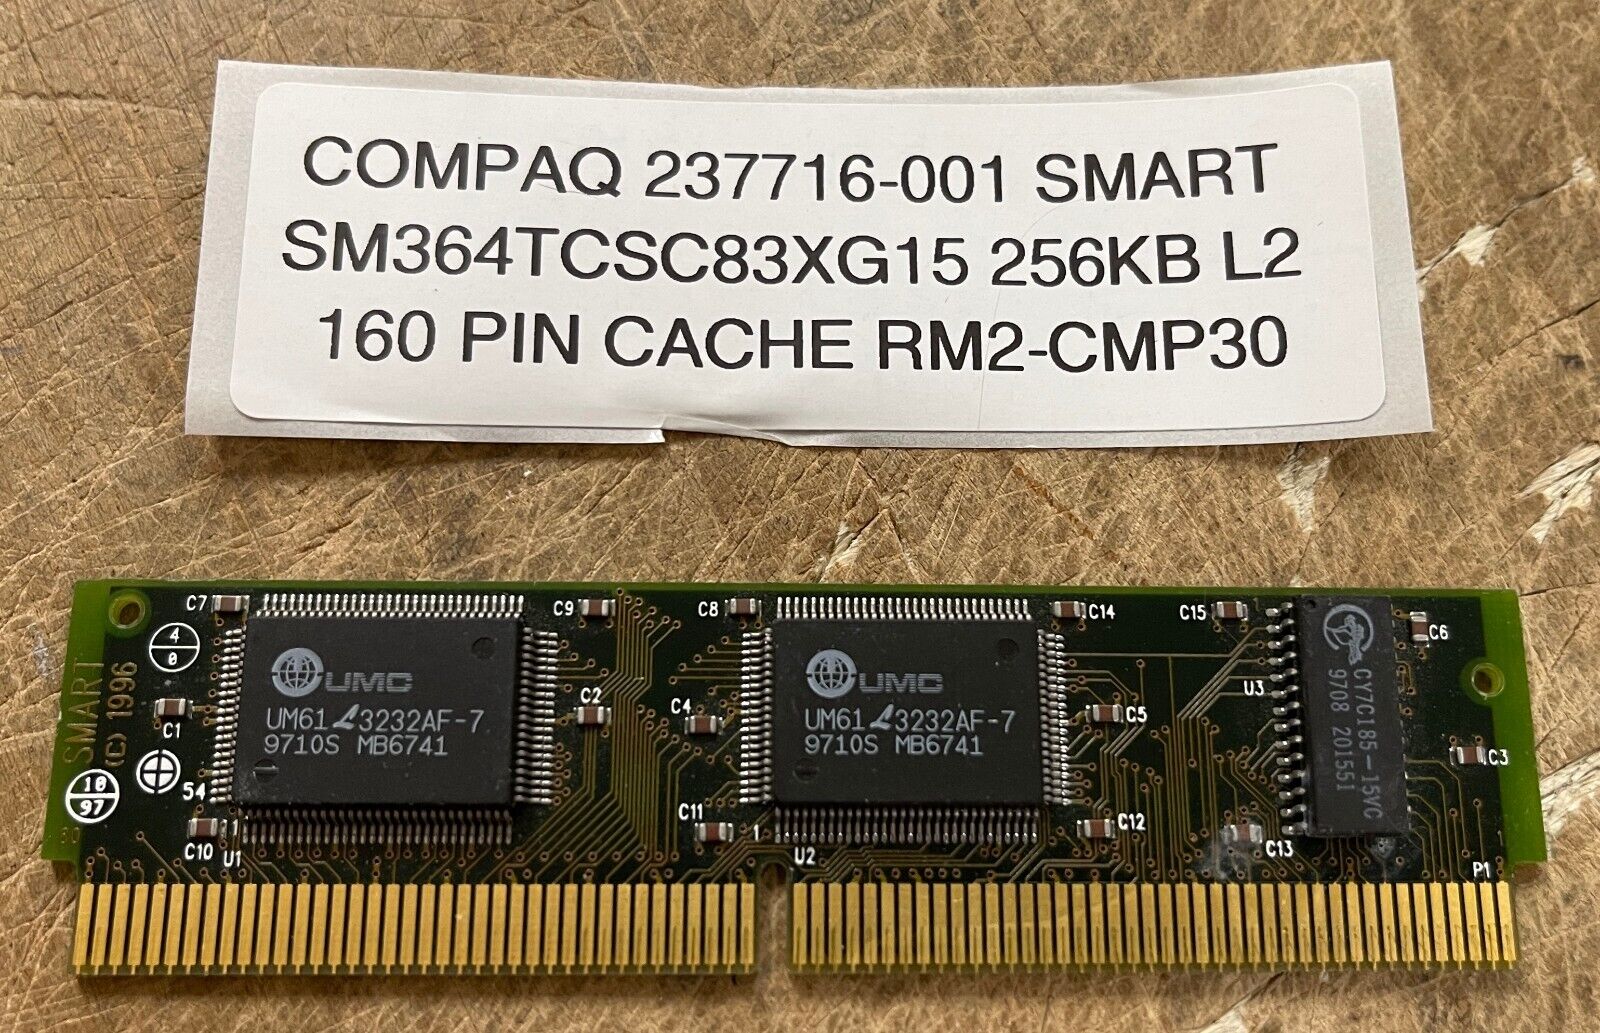 COMPAQ 237716-001 SMART SM364TCSC83XG15 256KB L2 160-PIN CACHE RM2-CMP30 Module